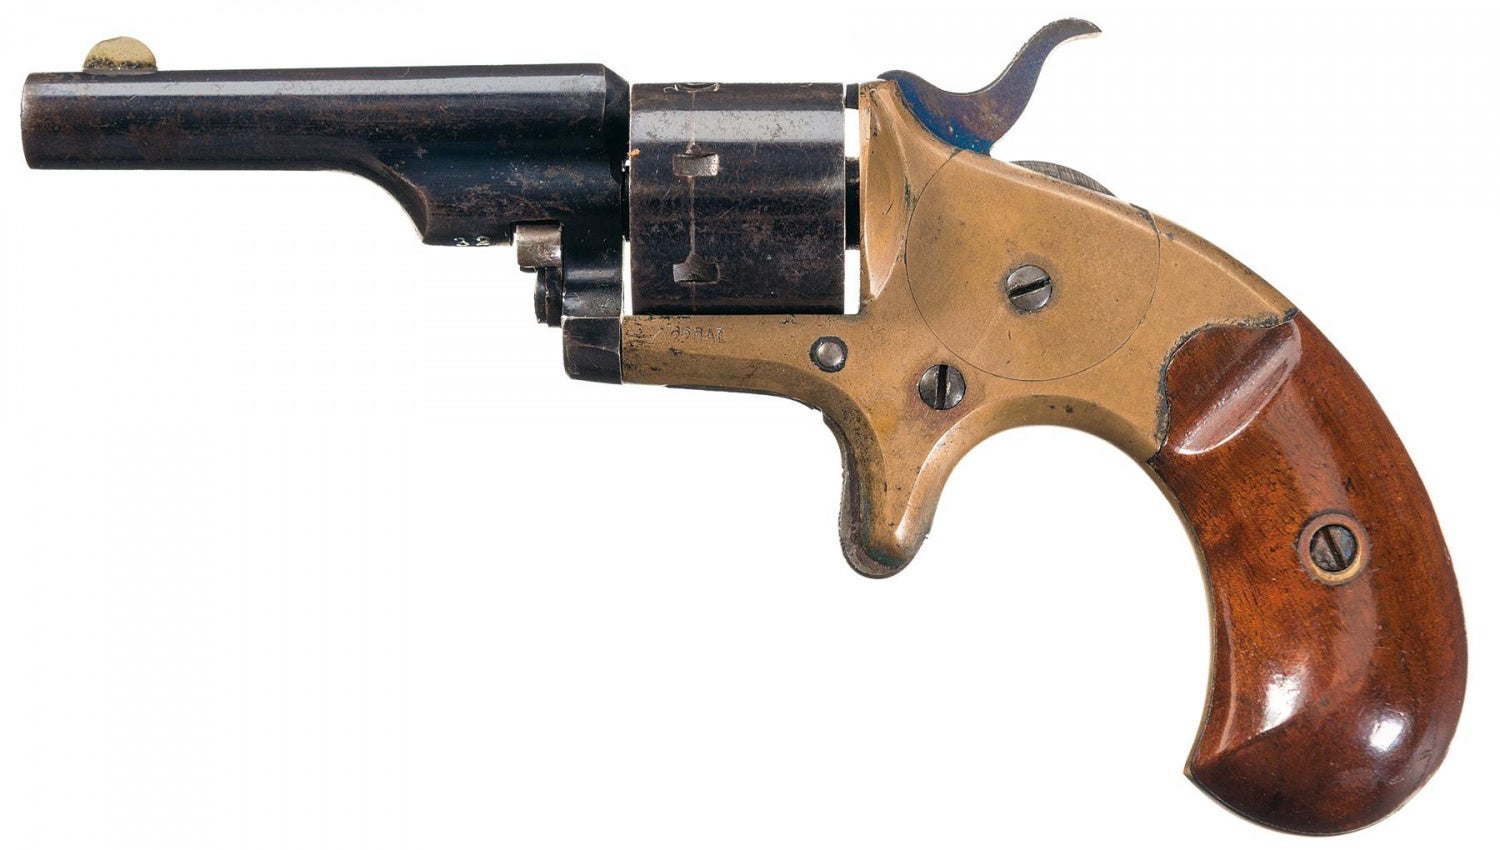 Colt's 1st Bird's Head revolver: Colt Open Top Pocket with Bird's Head grip Image Credit: Rock Island Auctions